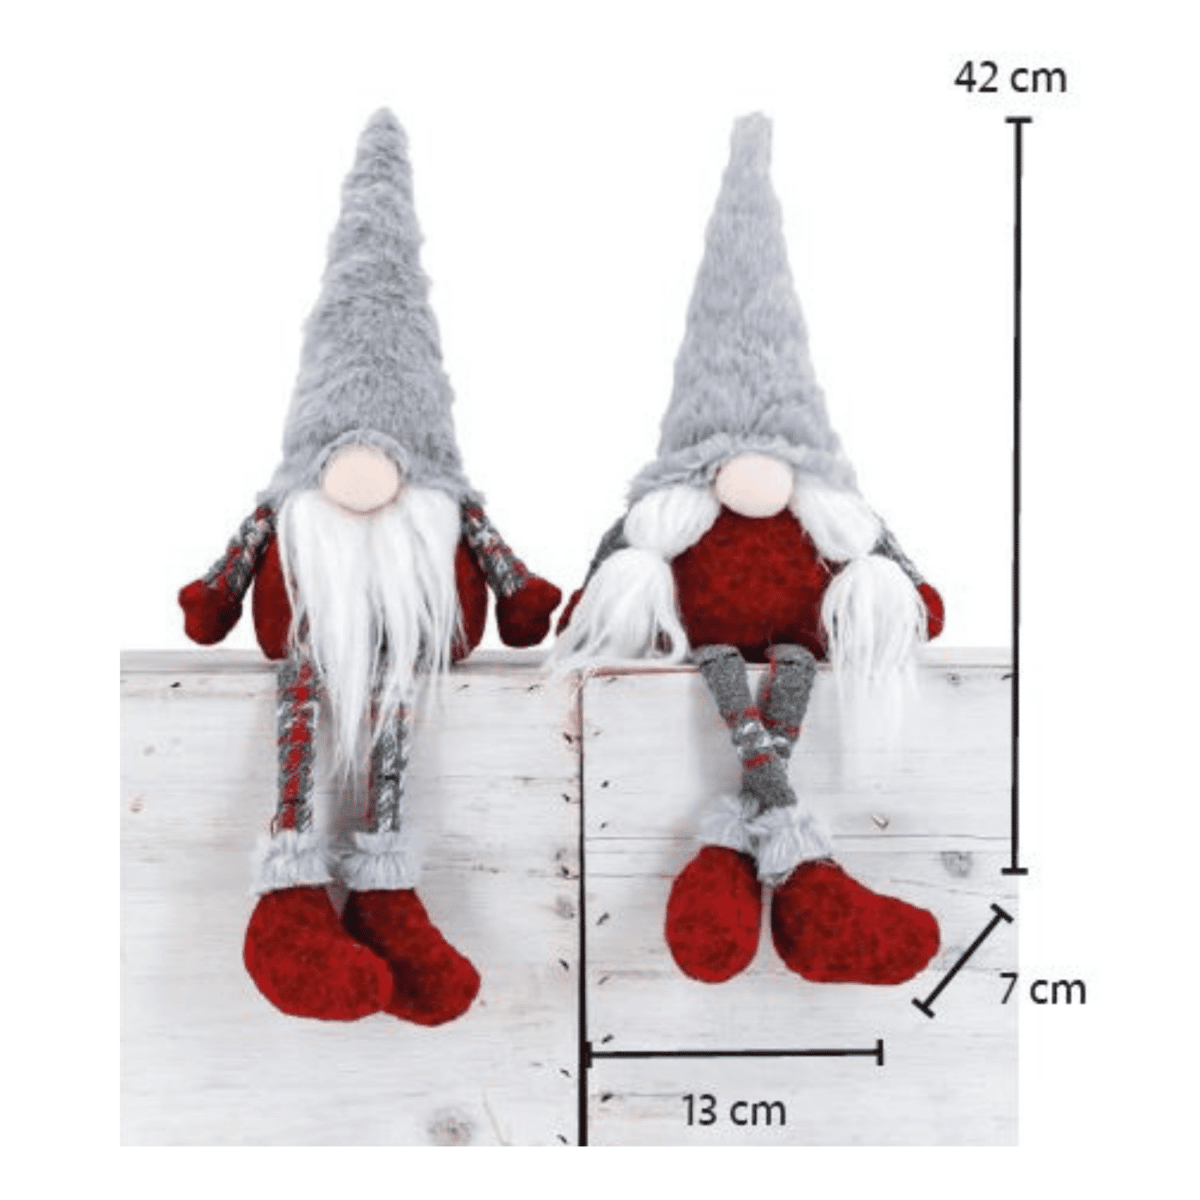 gnomo-simon-42-cm-elfi-gnomi-pupazzi-natale-decorazioni-natalizie-feltro-tirolese-misure